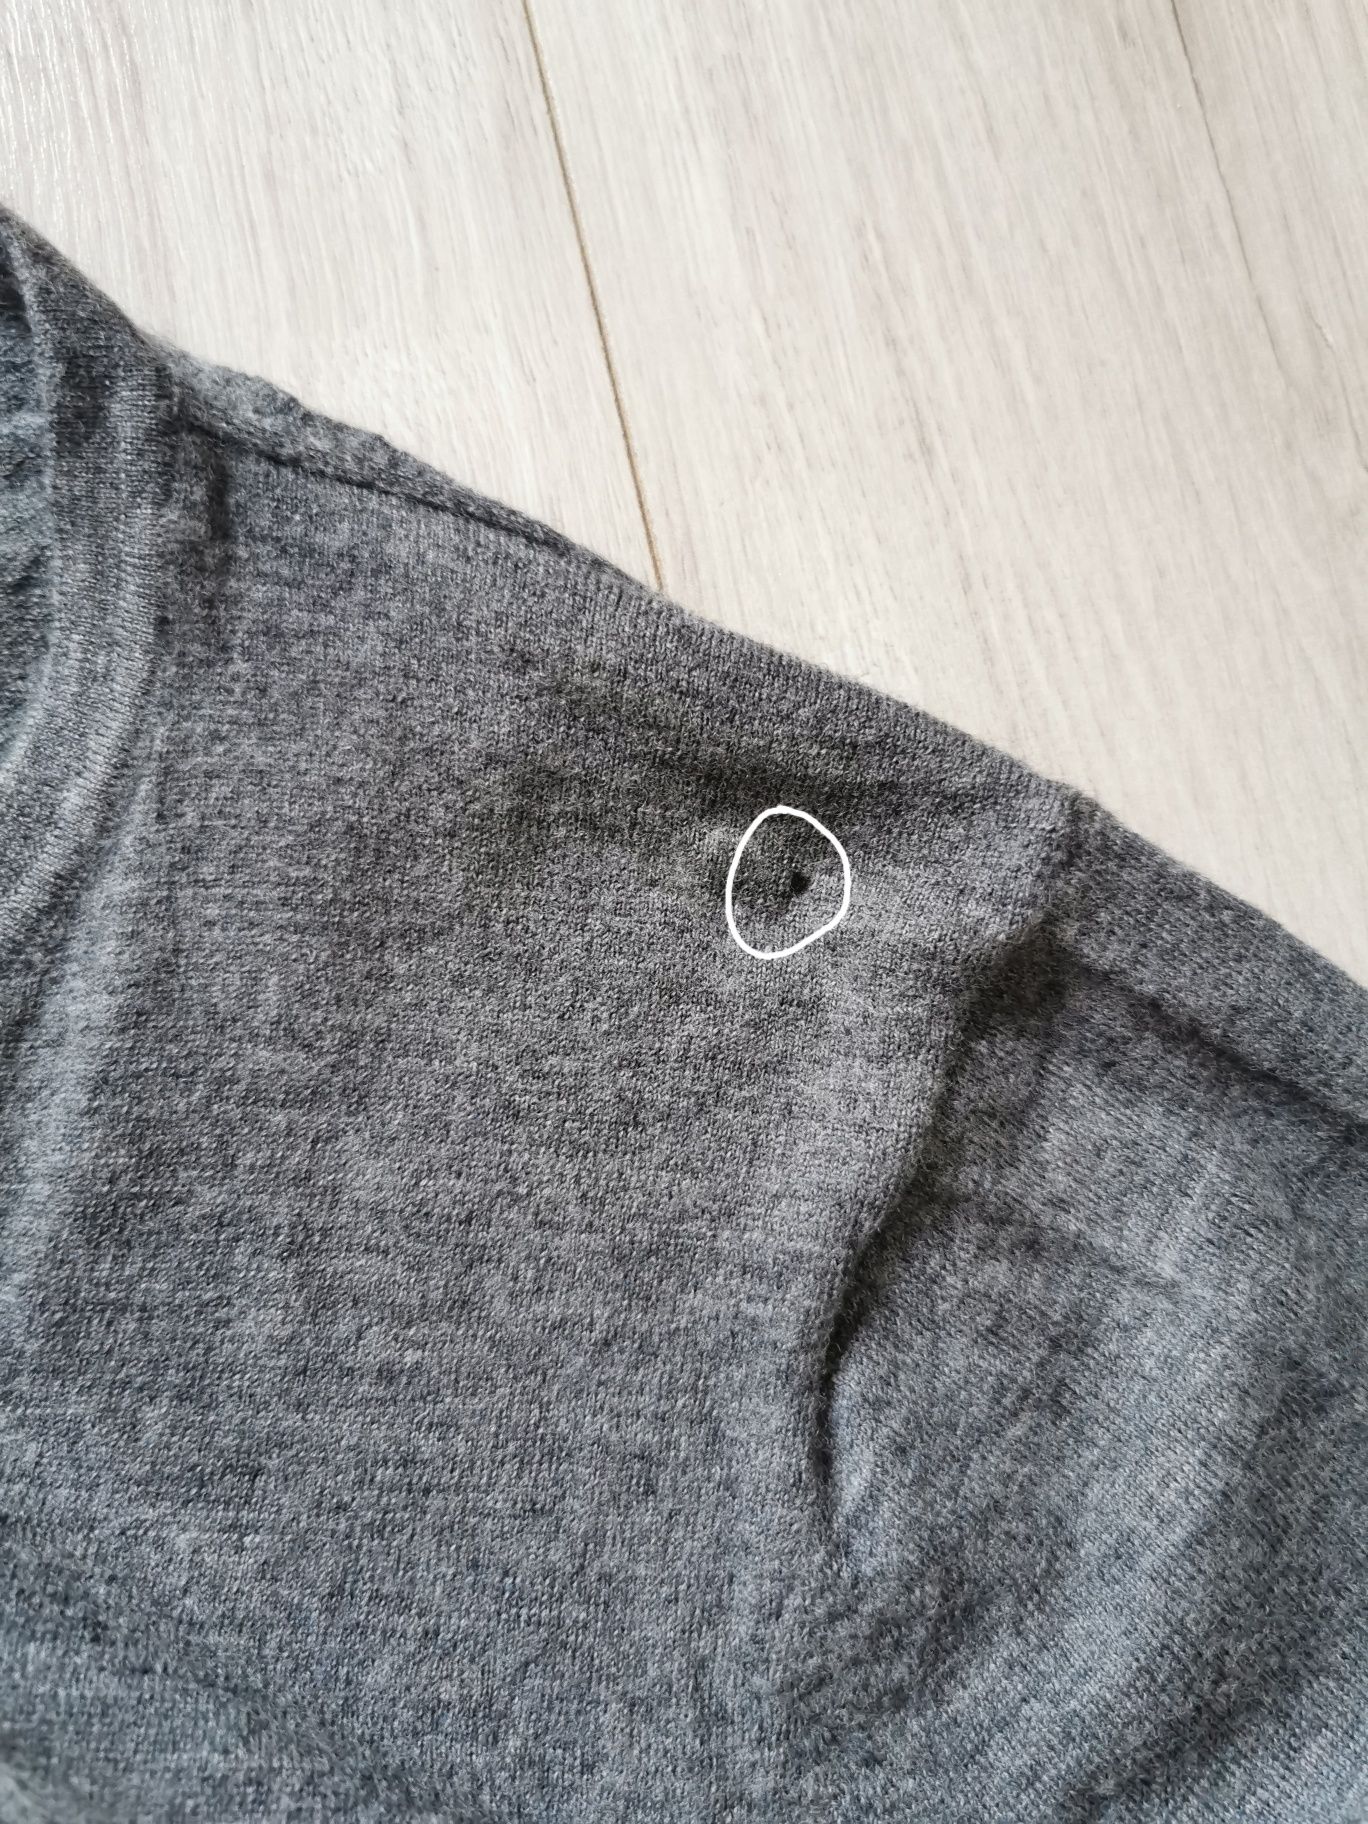 Linea wełniany cienki sweter szary / longsleeve Basic 100% wełna merin